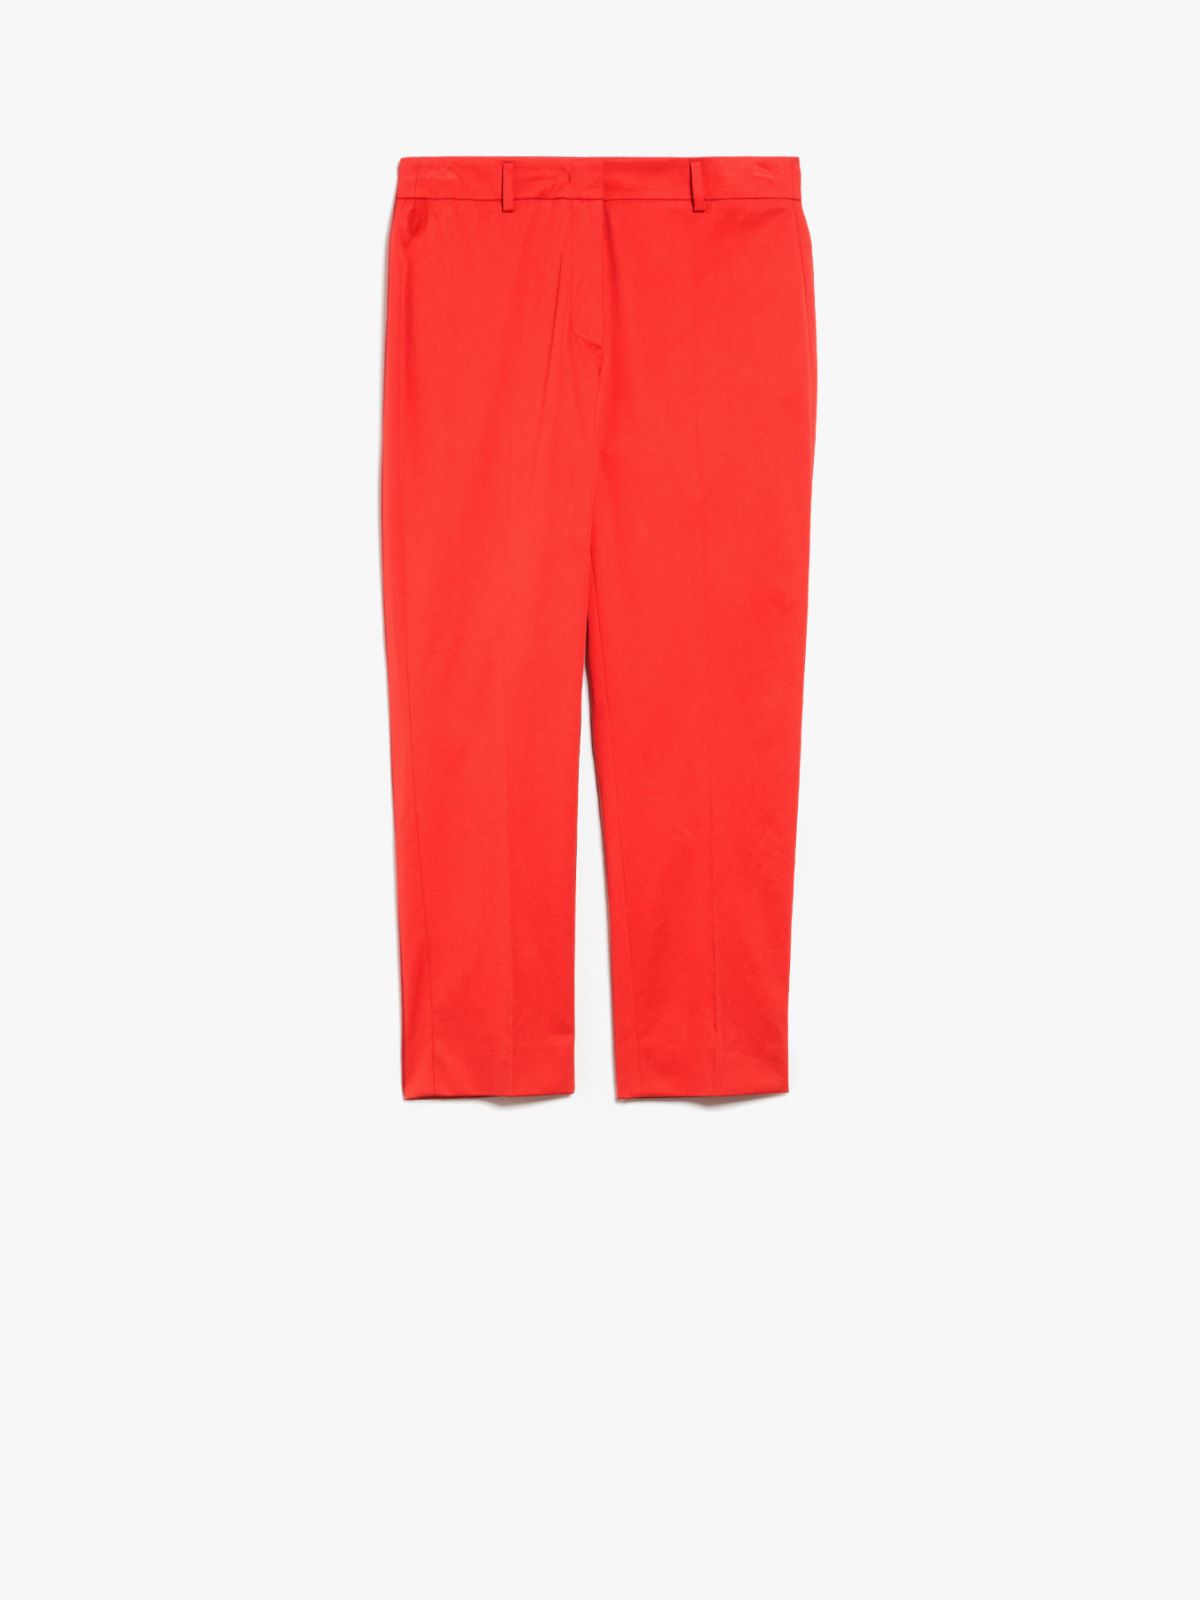 Cotton gabardine trousers  - RED - Weekend Max Mara - 5